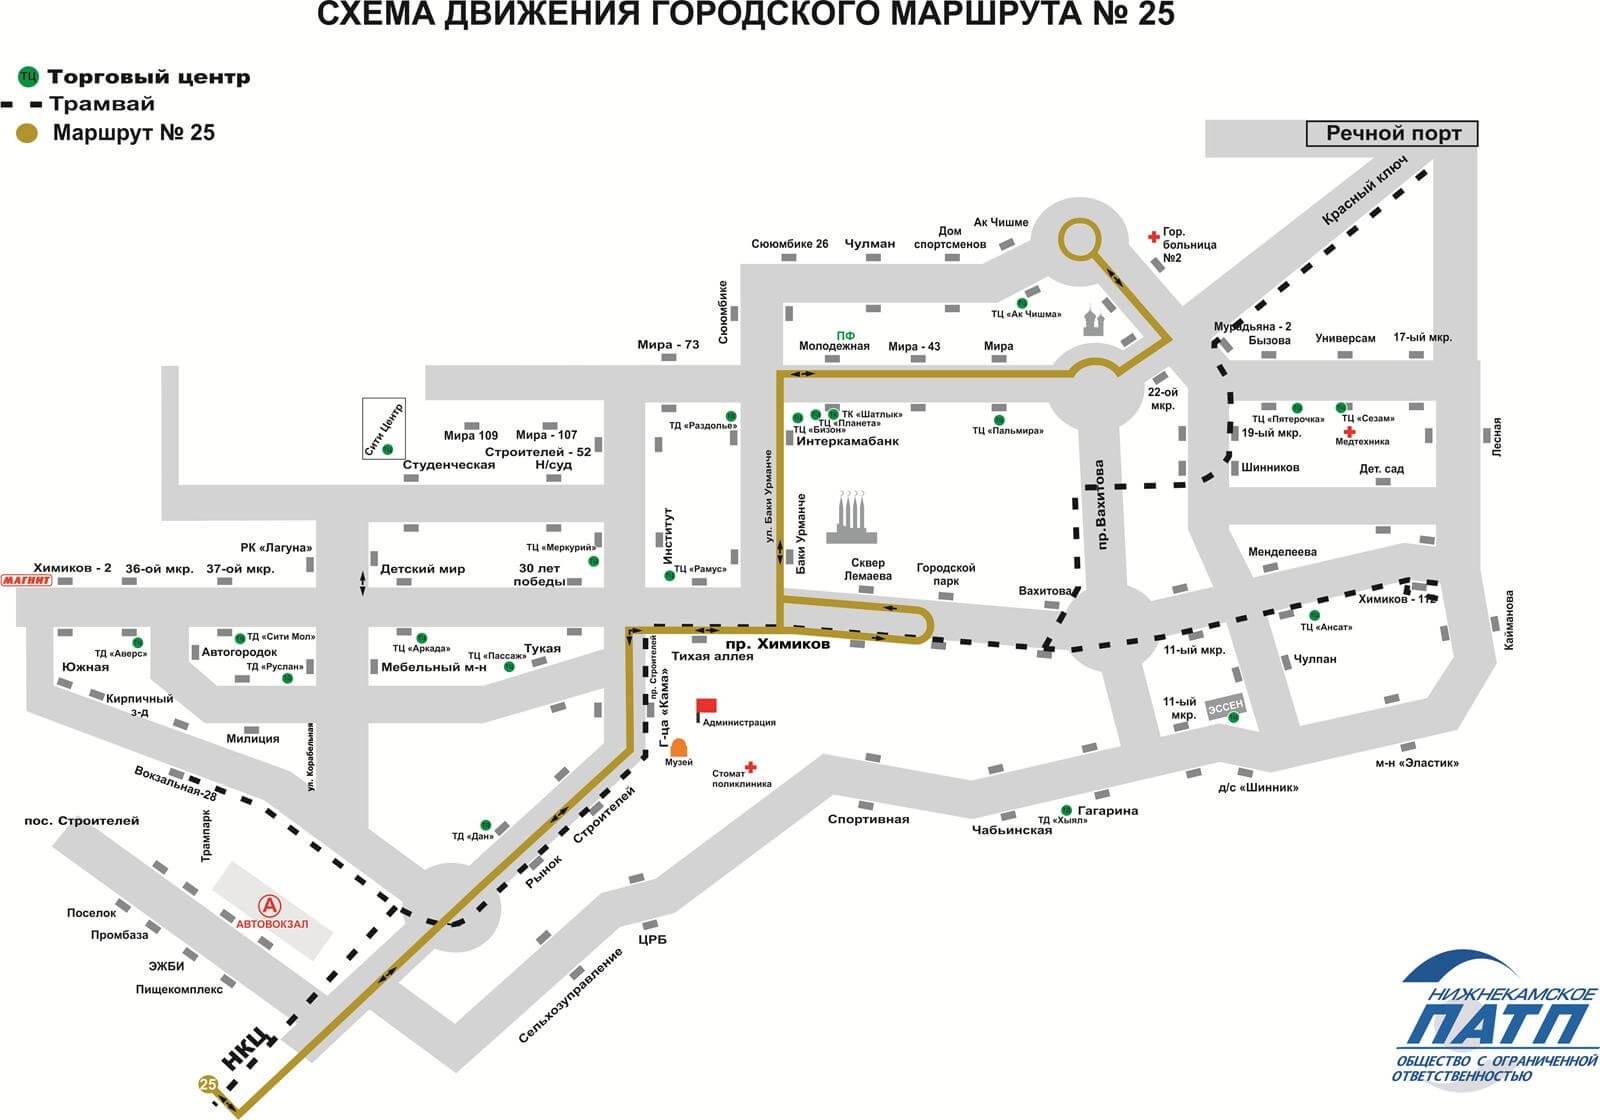 НПАТП маршруты схема 25 маршрута 14.12.2016